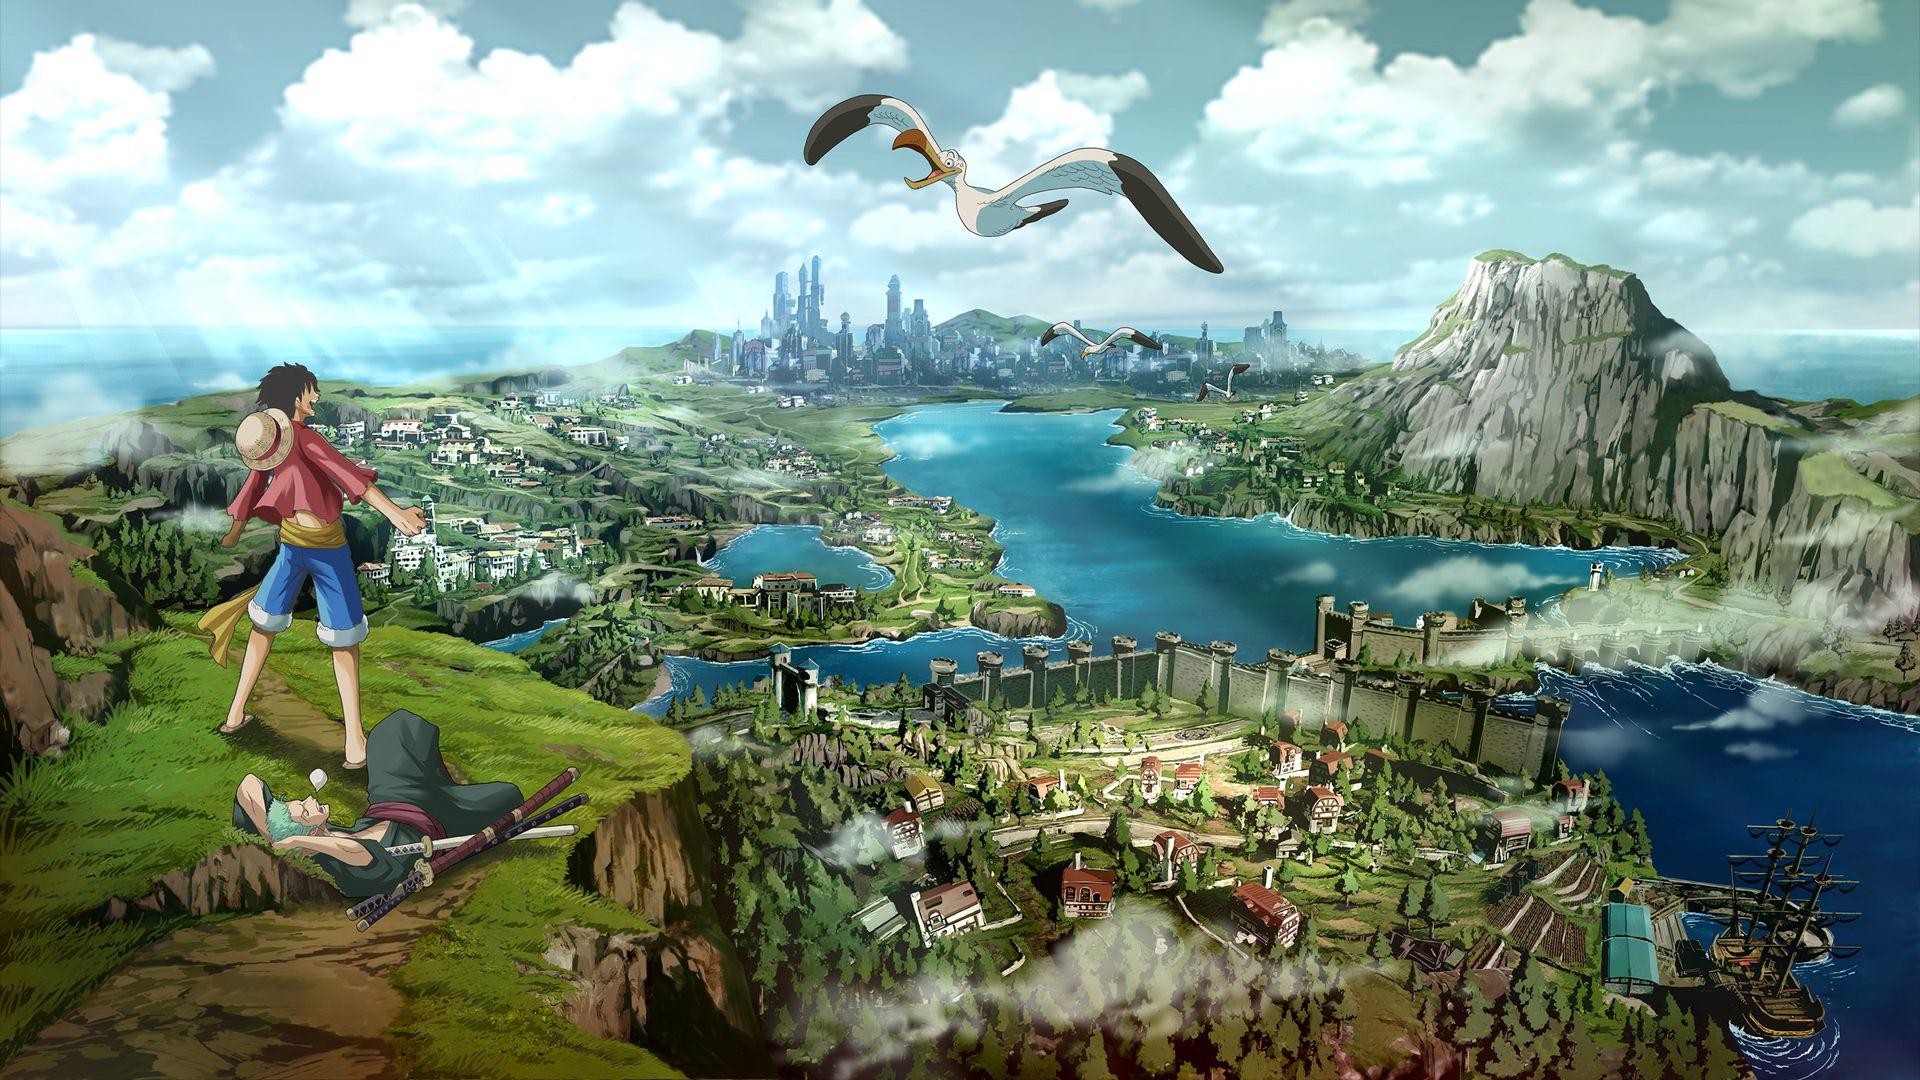 One Piece Landscape Wallpapers - Top Free One Piece Landscape ...